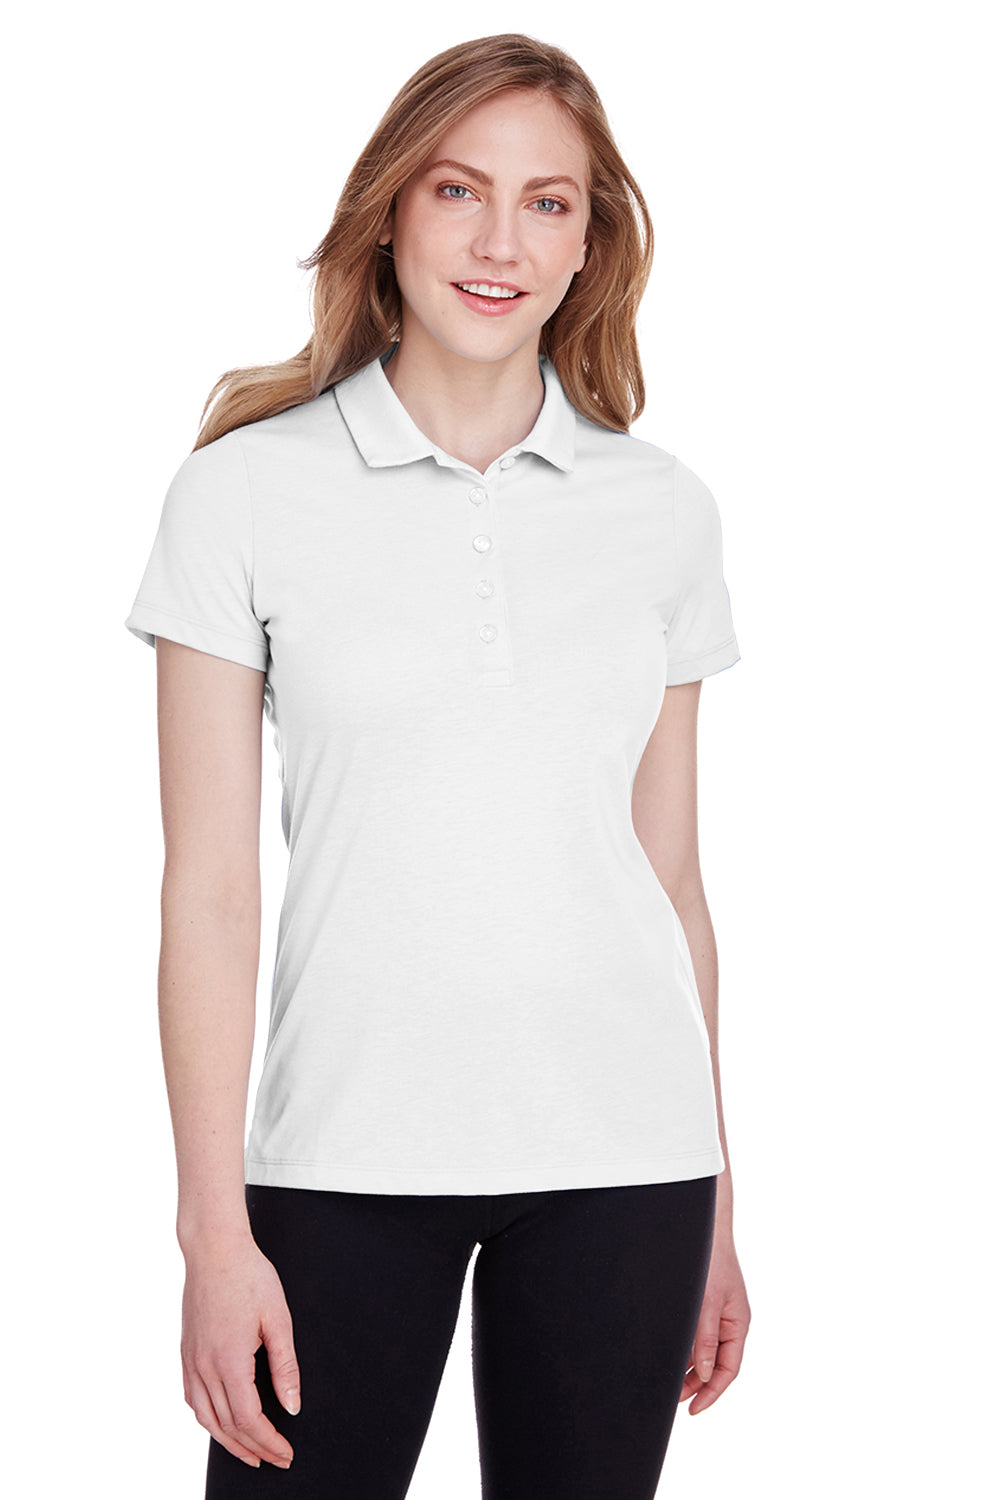 Puma 596921 Womens Fusion Performance Moisture Wicking Short Sleeve Polo Shirt White Front